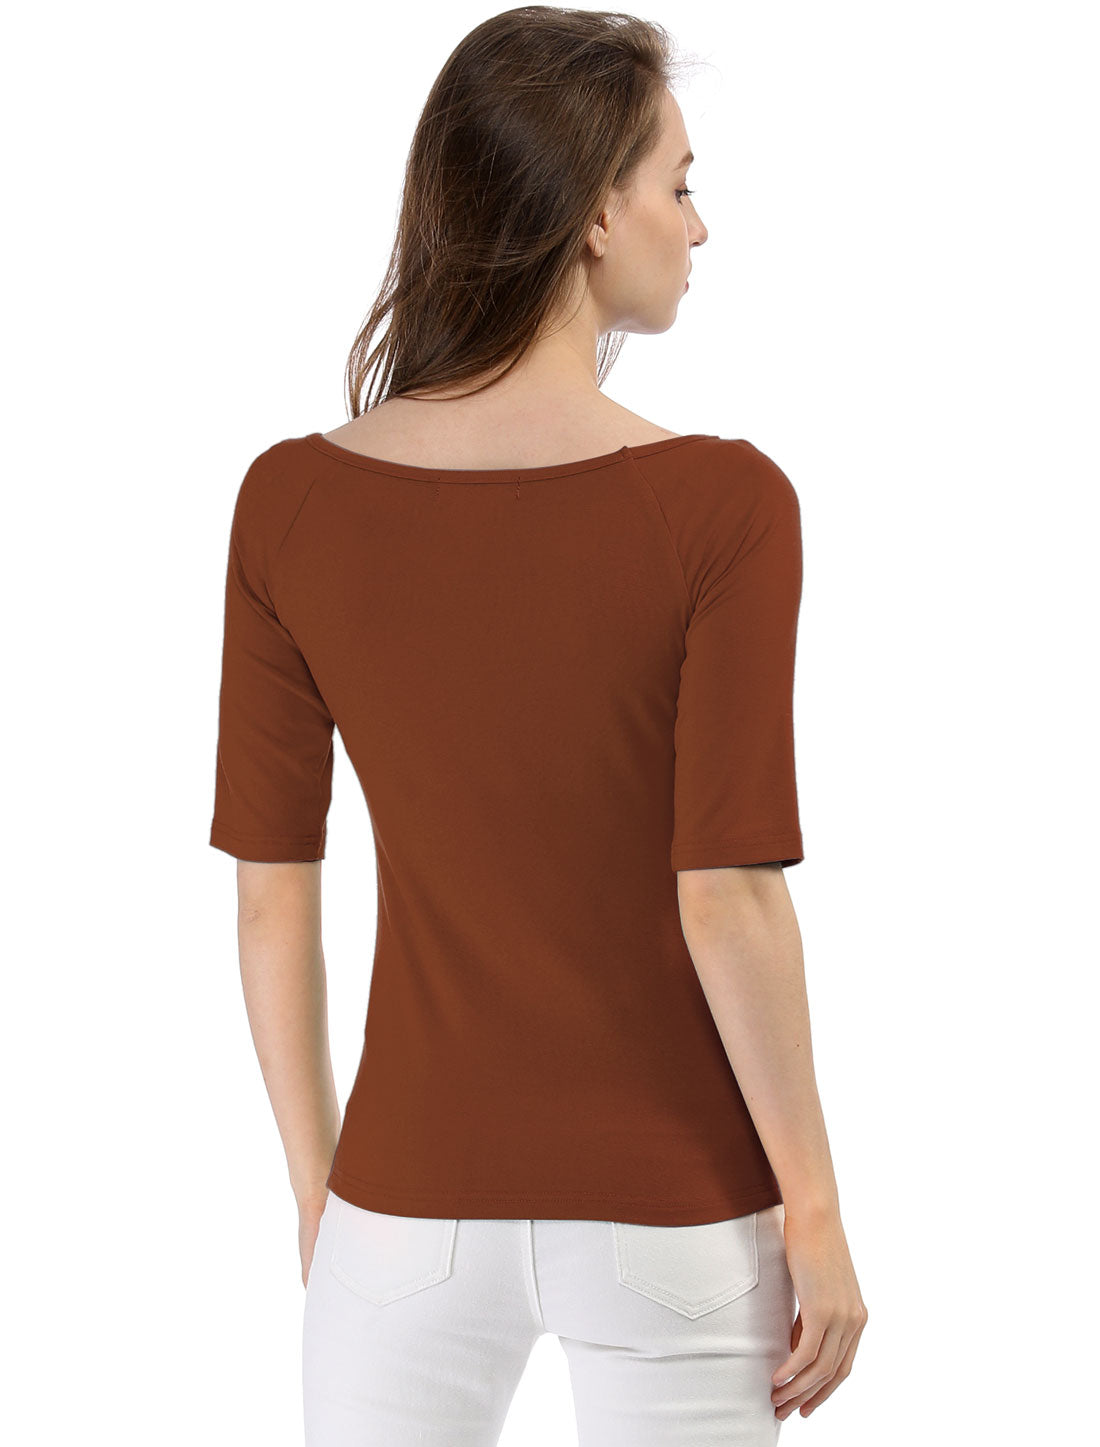 Allegra K Half Sleeve Scoop Neck Fitted Layering Top T-Shirt